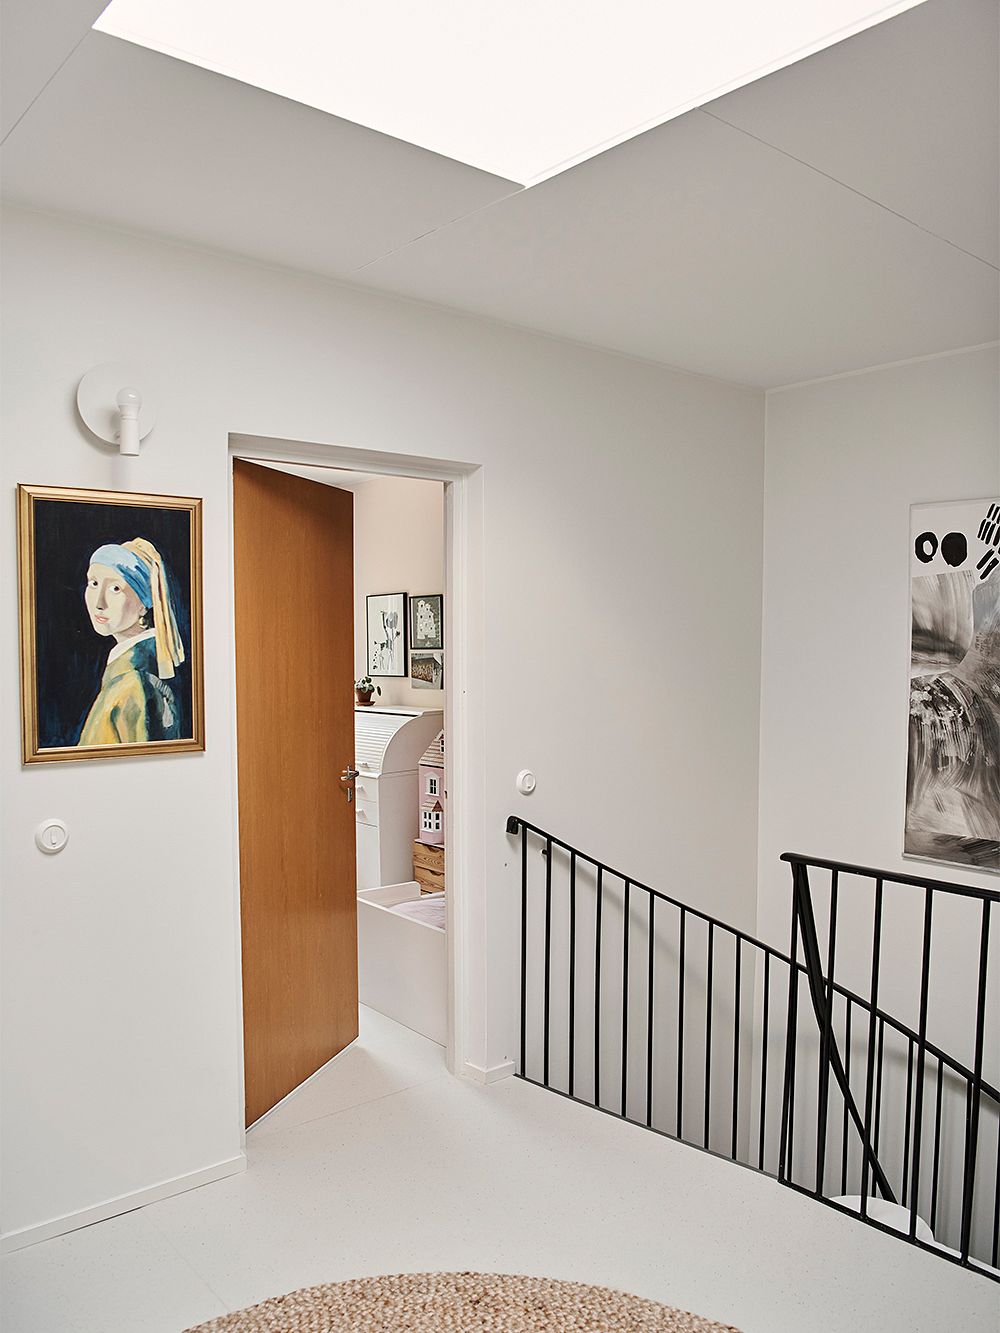 An image of Asli Ufacik's home: the hallway decor.